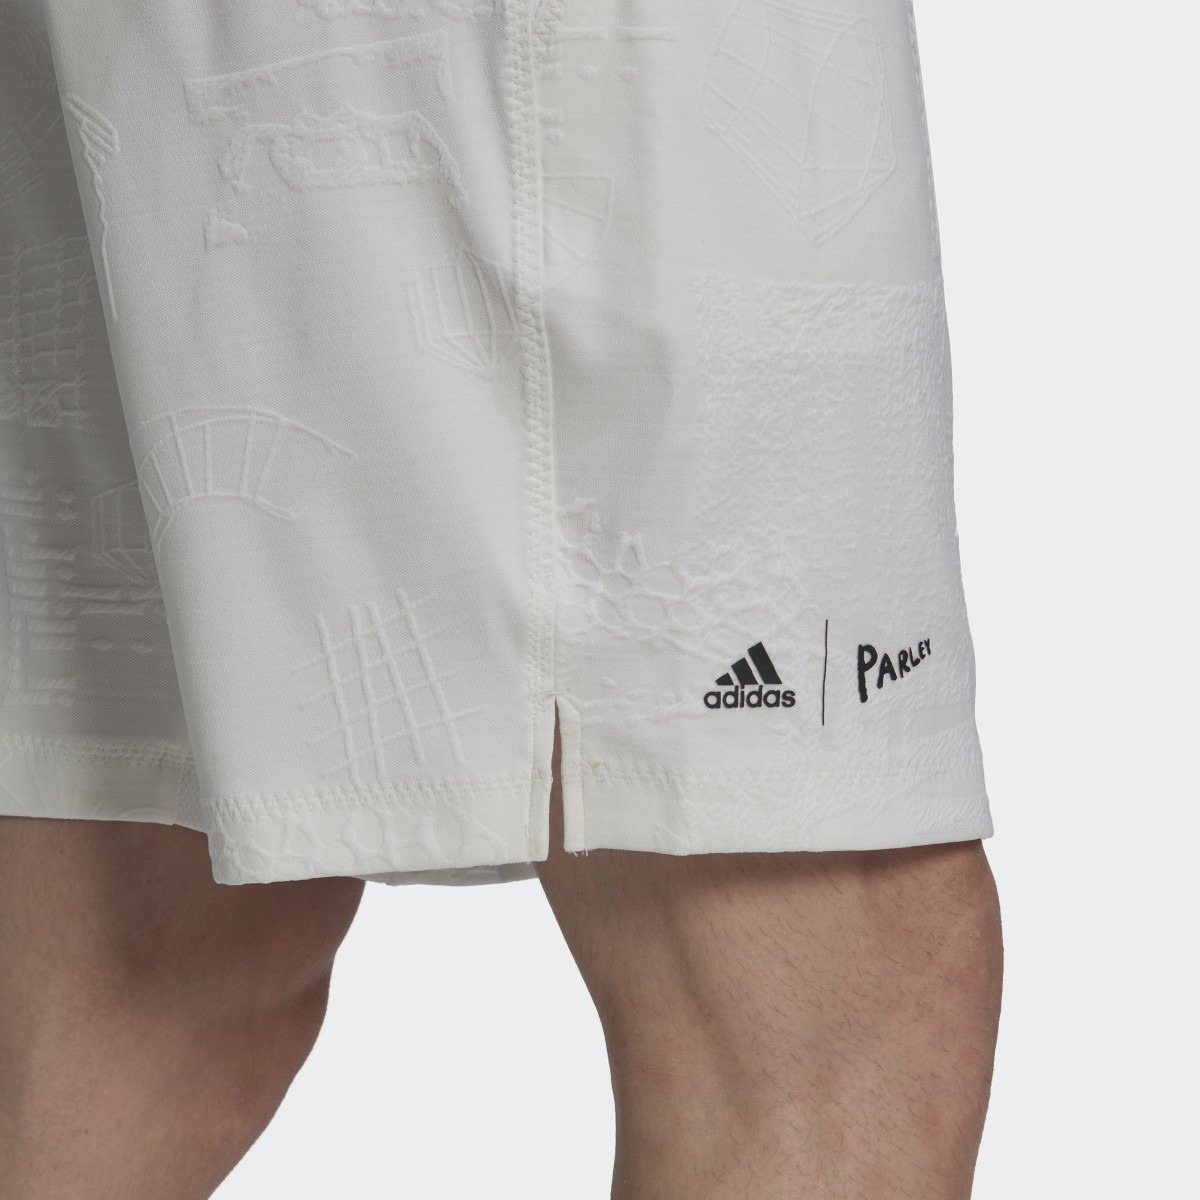 Adidas Tennis London Knit Ergo Shorts. 5